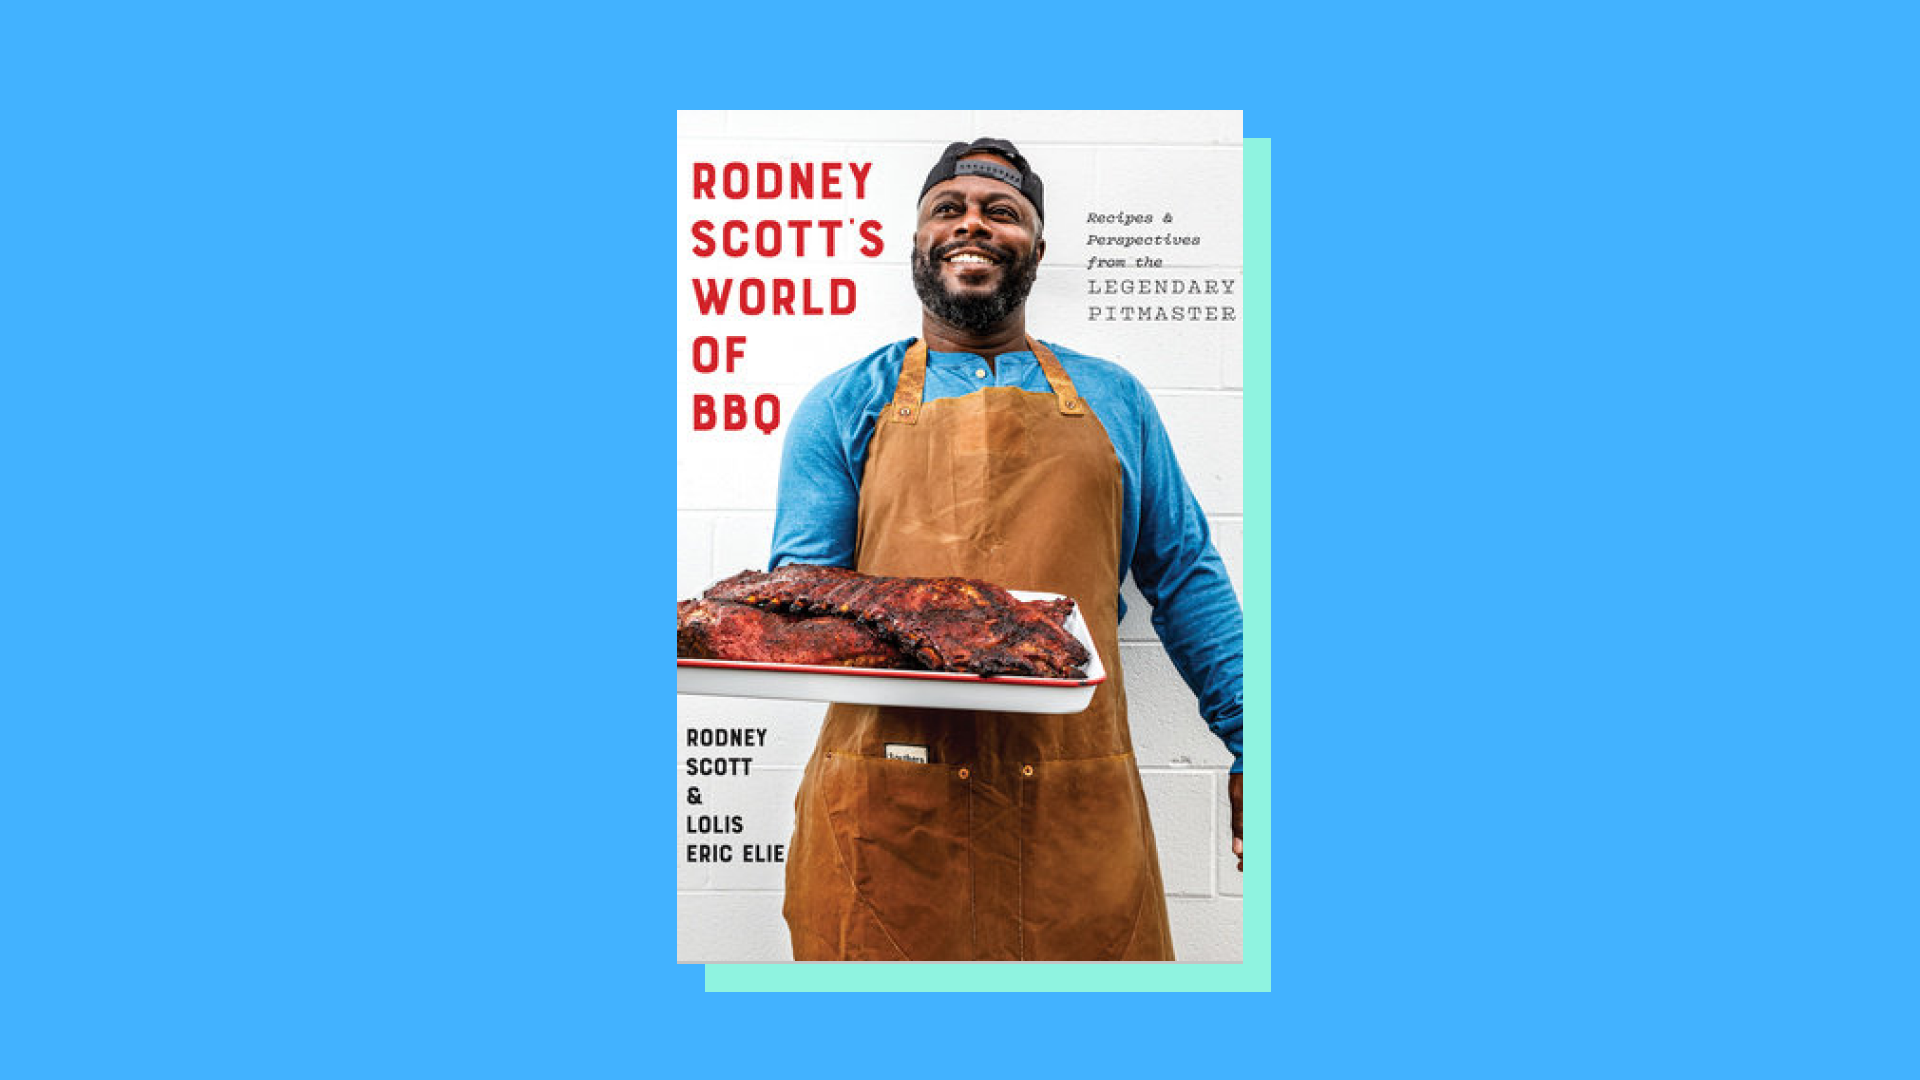 “Rodney Scott's World of BBQ” by Rodney Scott and Lolis Eric Elie